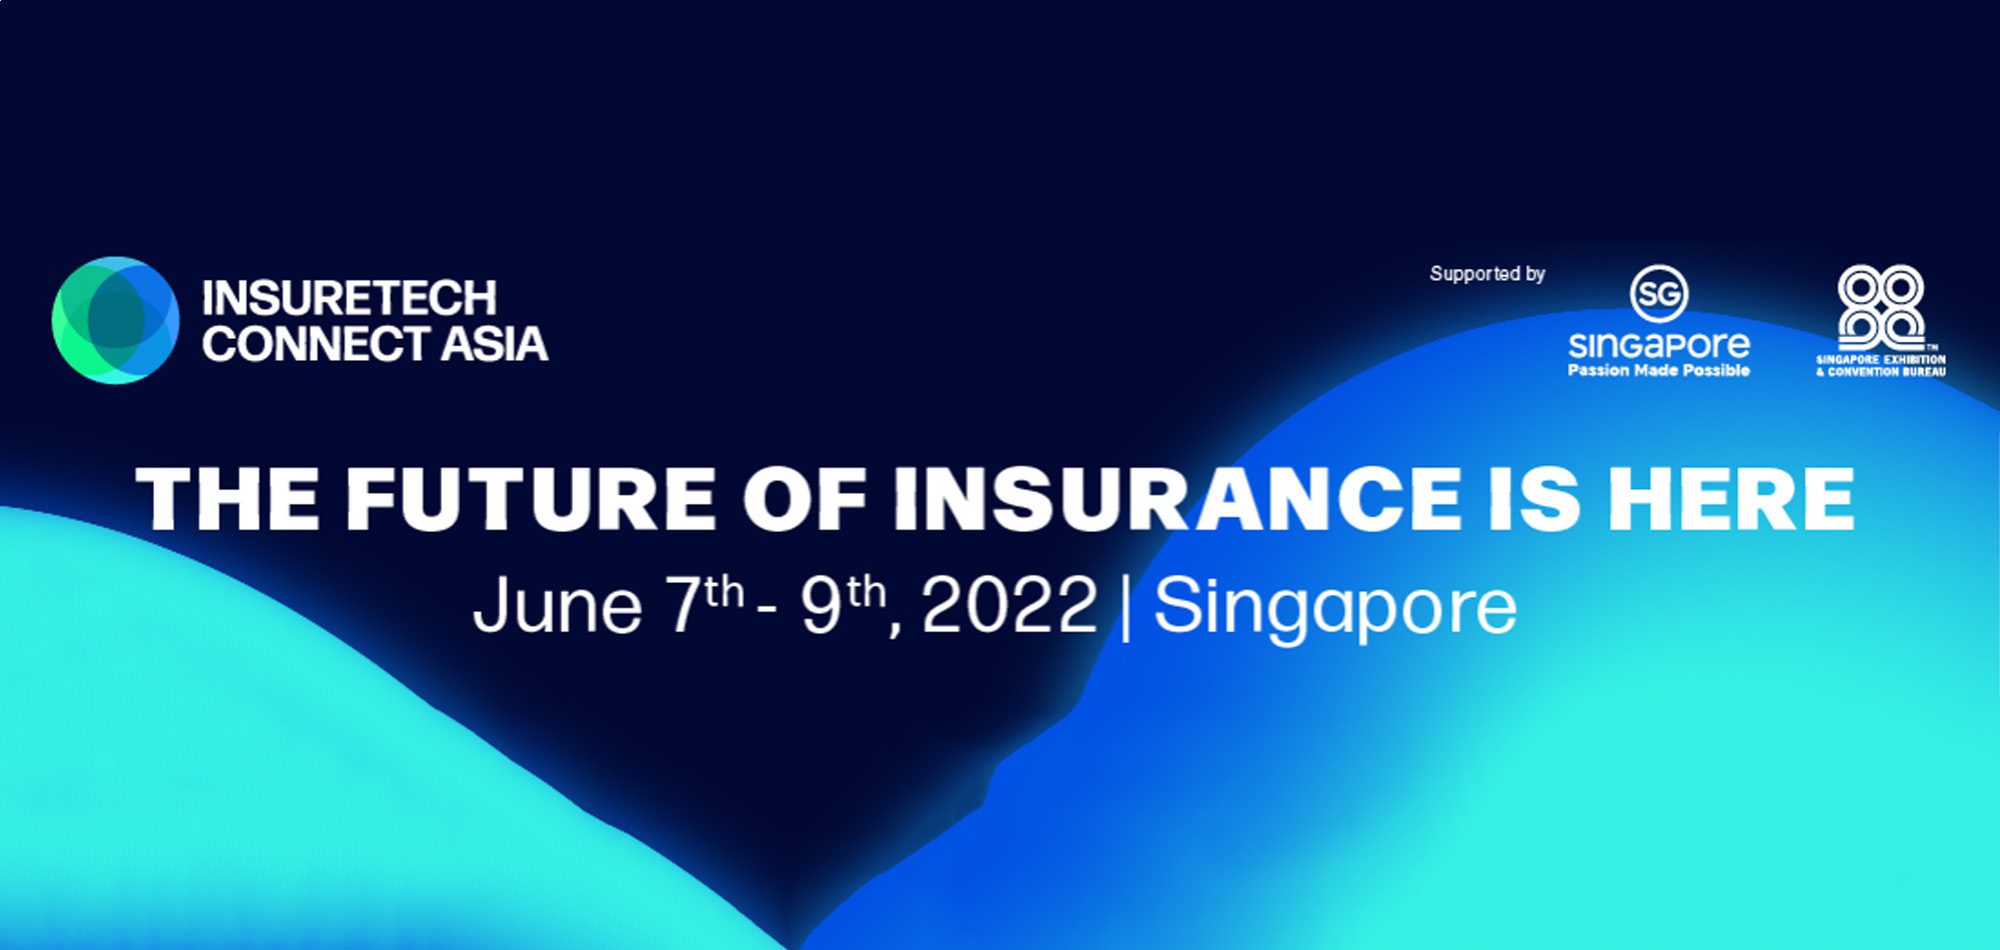 Insuretech Connect Asia 2022